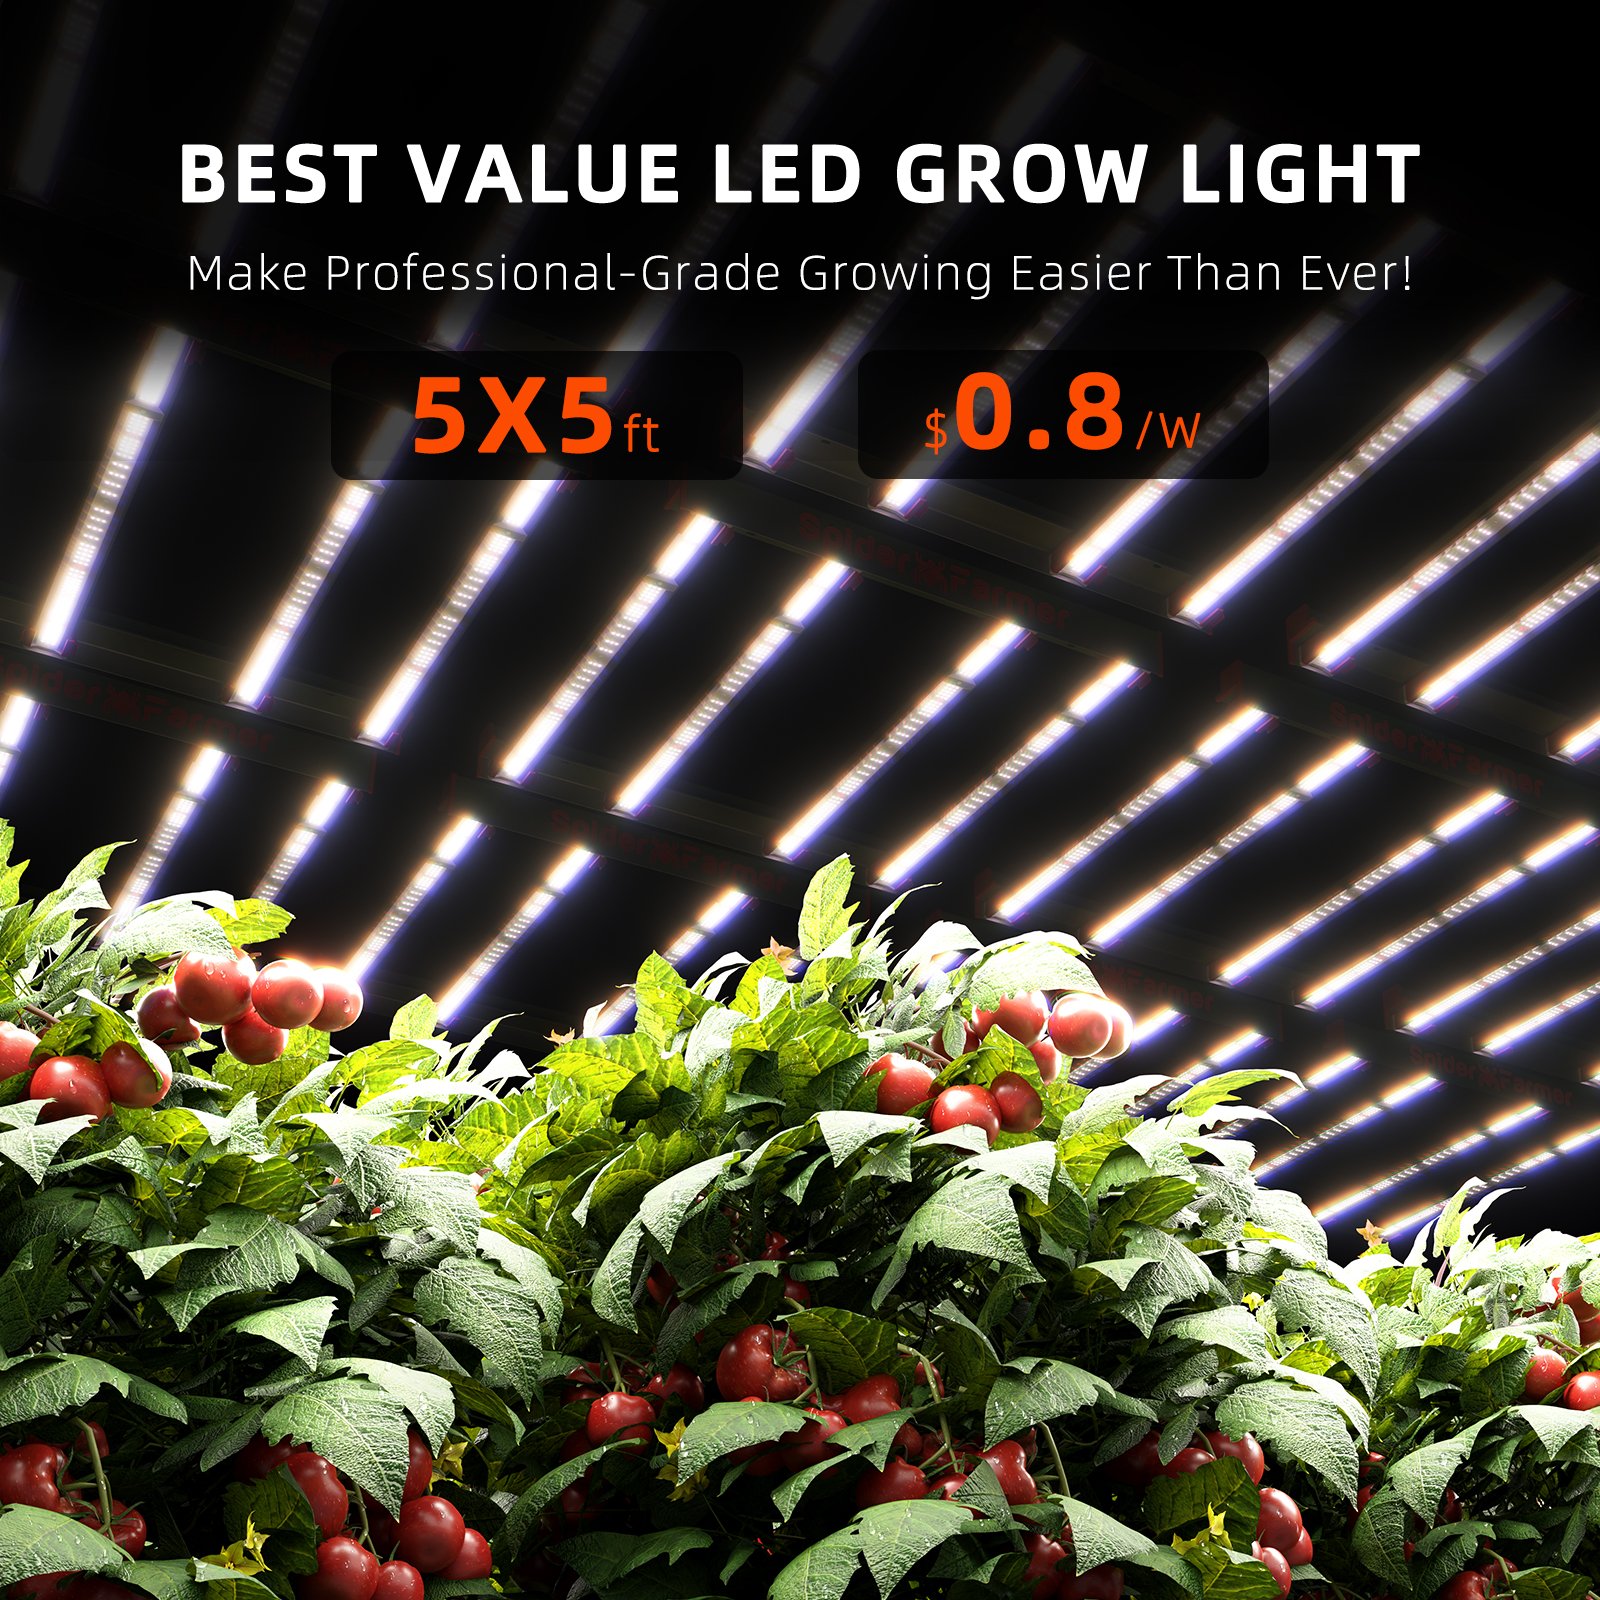 Professional LED grow lights